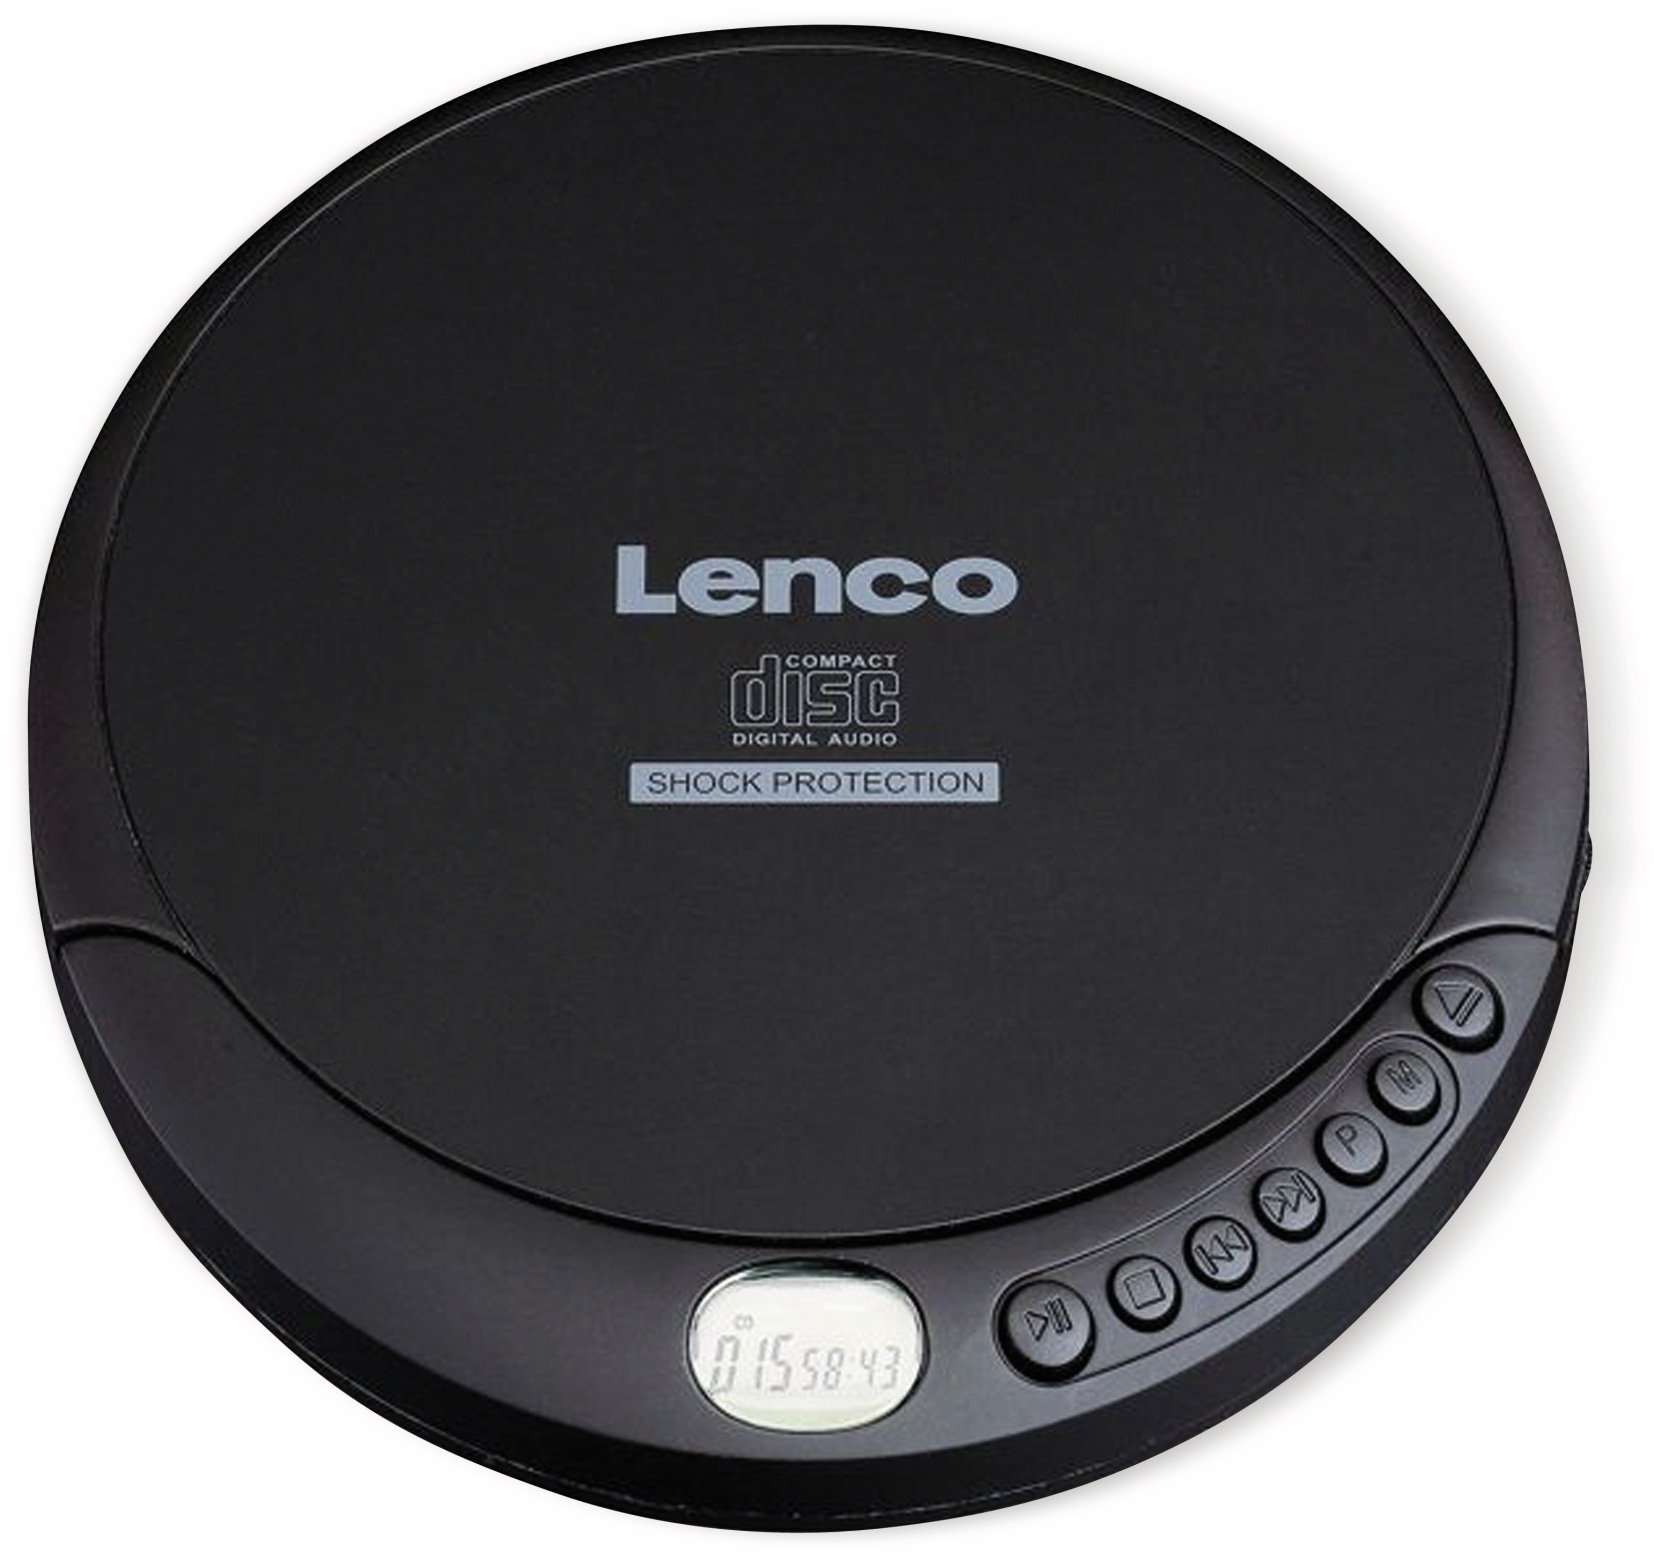 LENCO Portabler CD-Player CD-200BK, schwarz